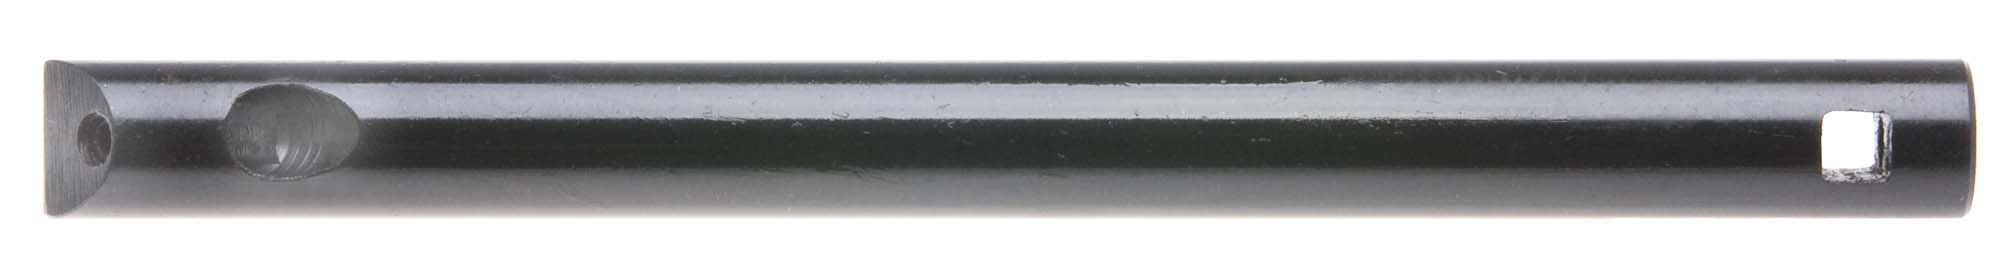 3/4" Double End Boring Bar- High Speed Steel Toolbit Type